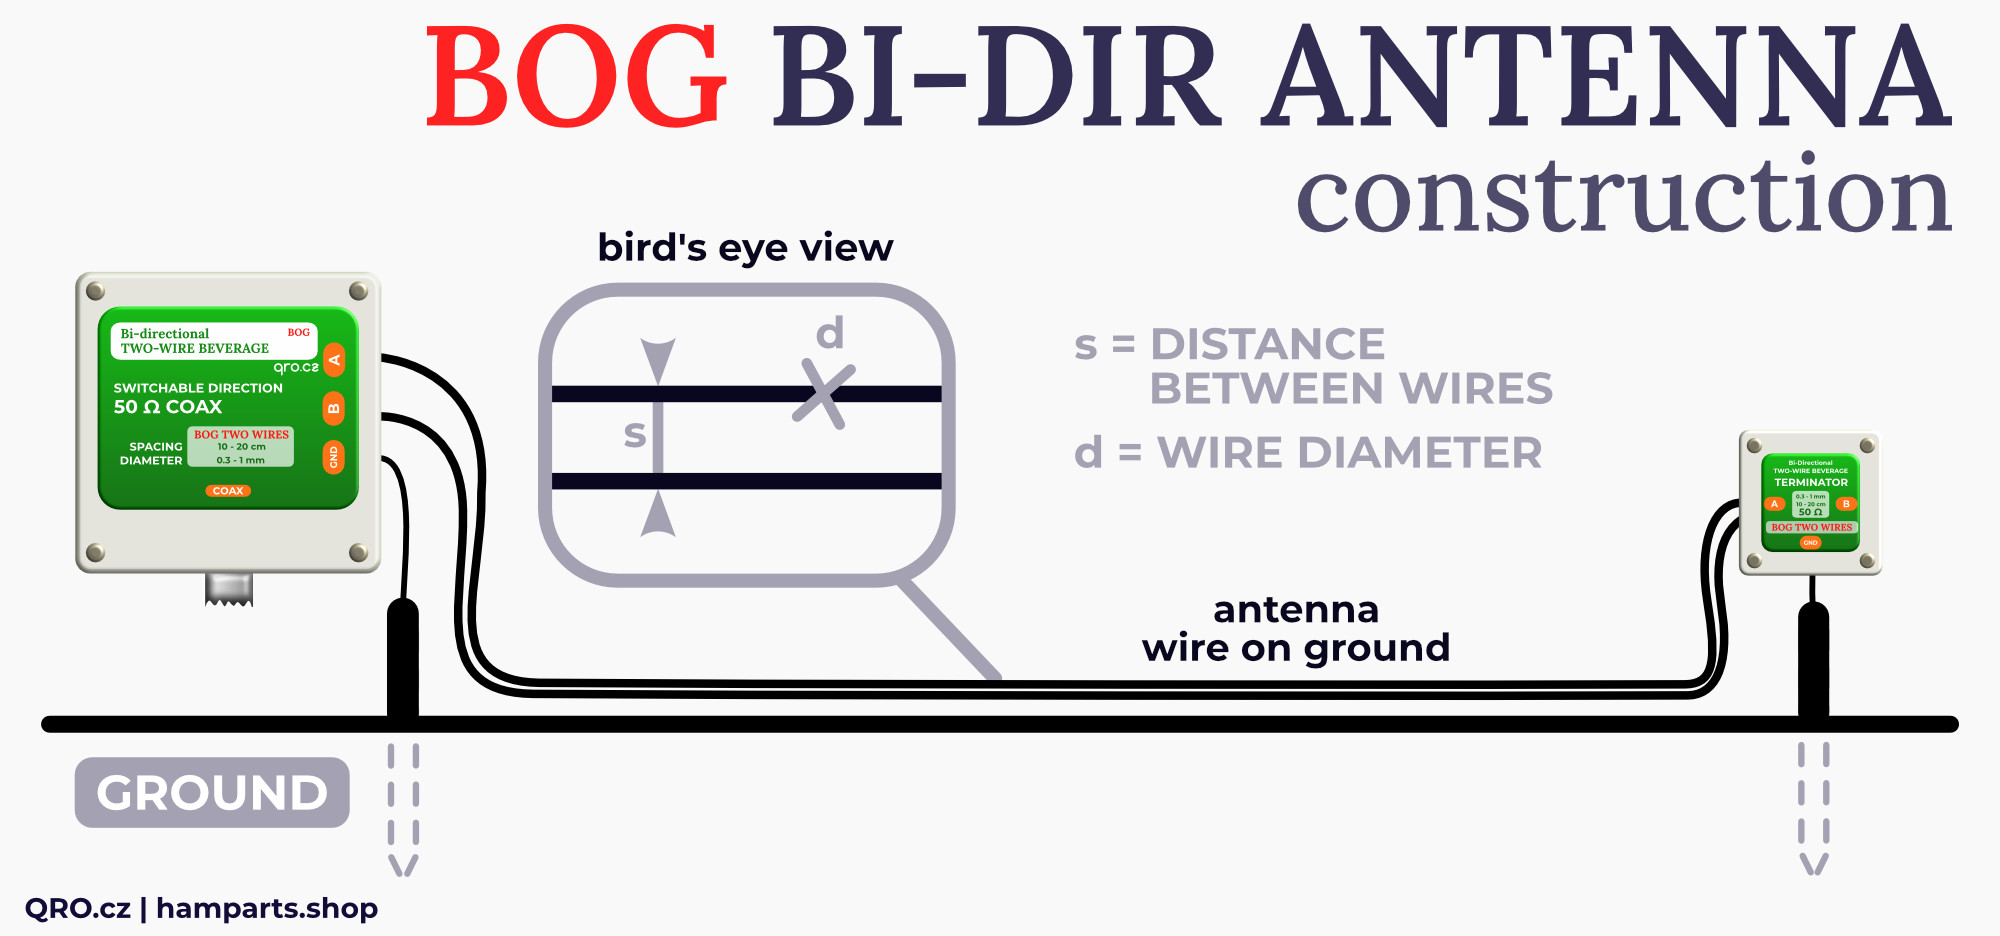 bi-directional beverage antenna bog construction by qro.cz hampart.shop